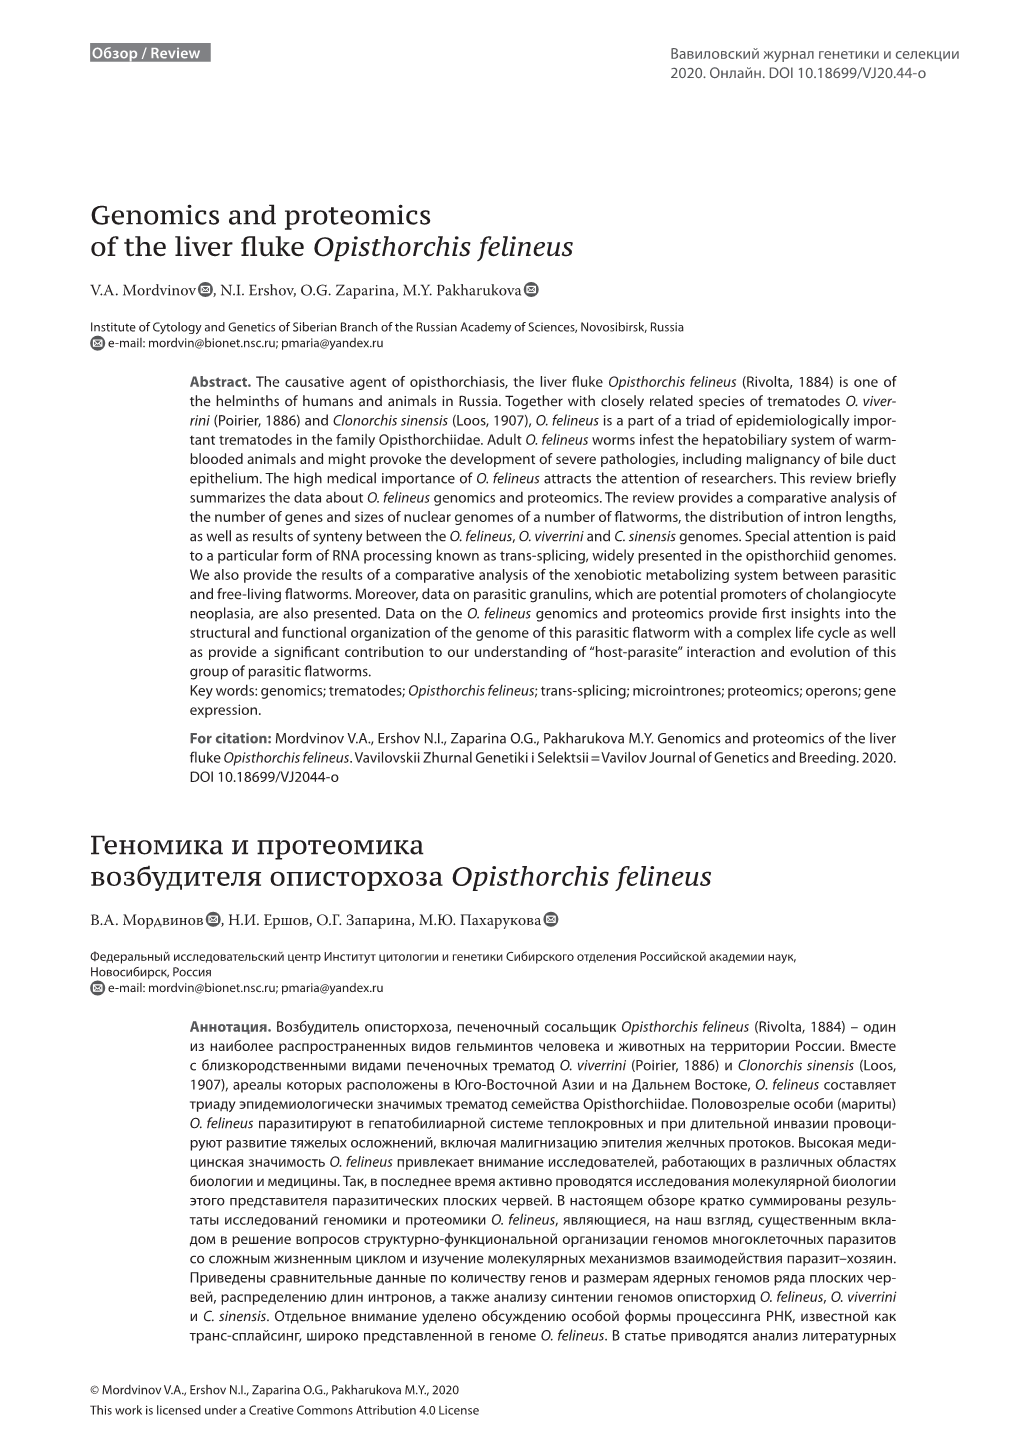 Genomics and Proteomics of the Liver Fluke Opisthorchis Felineus